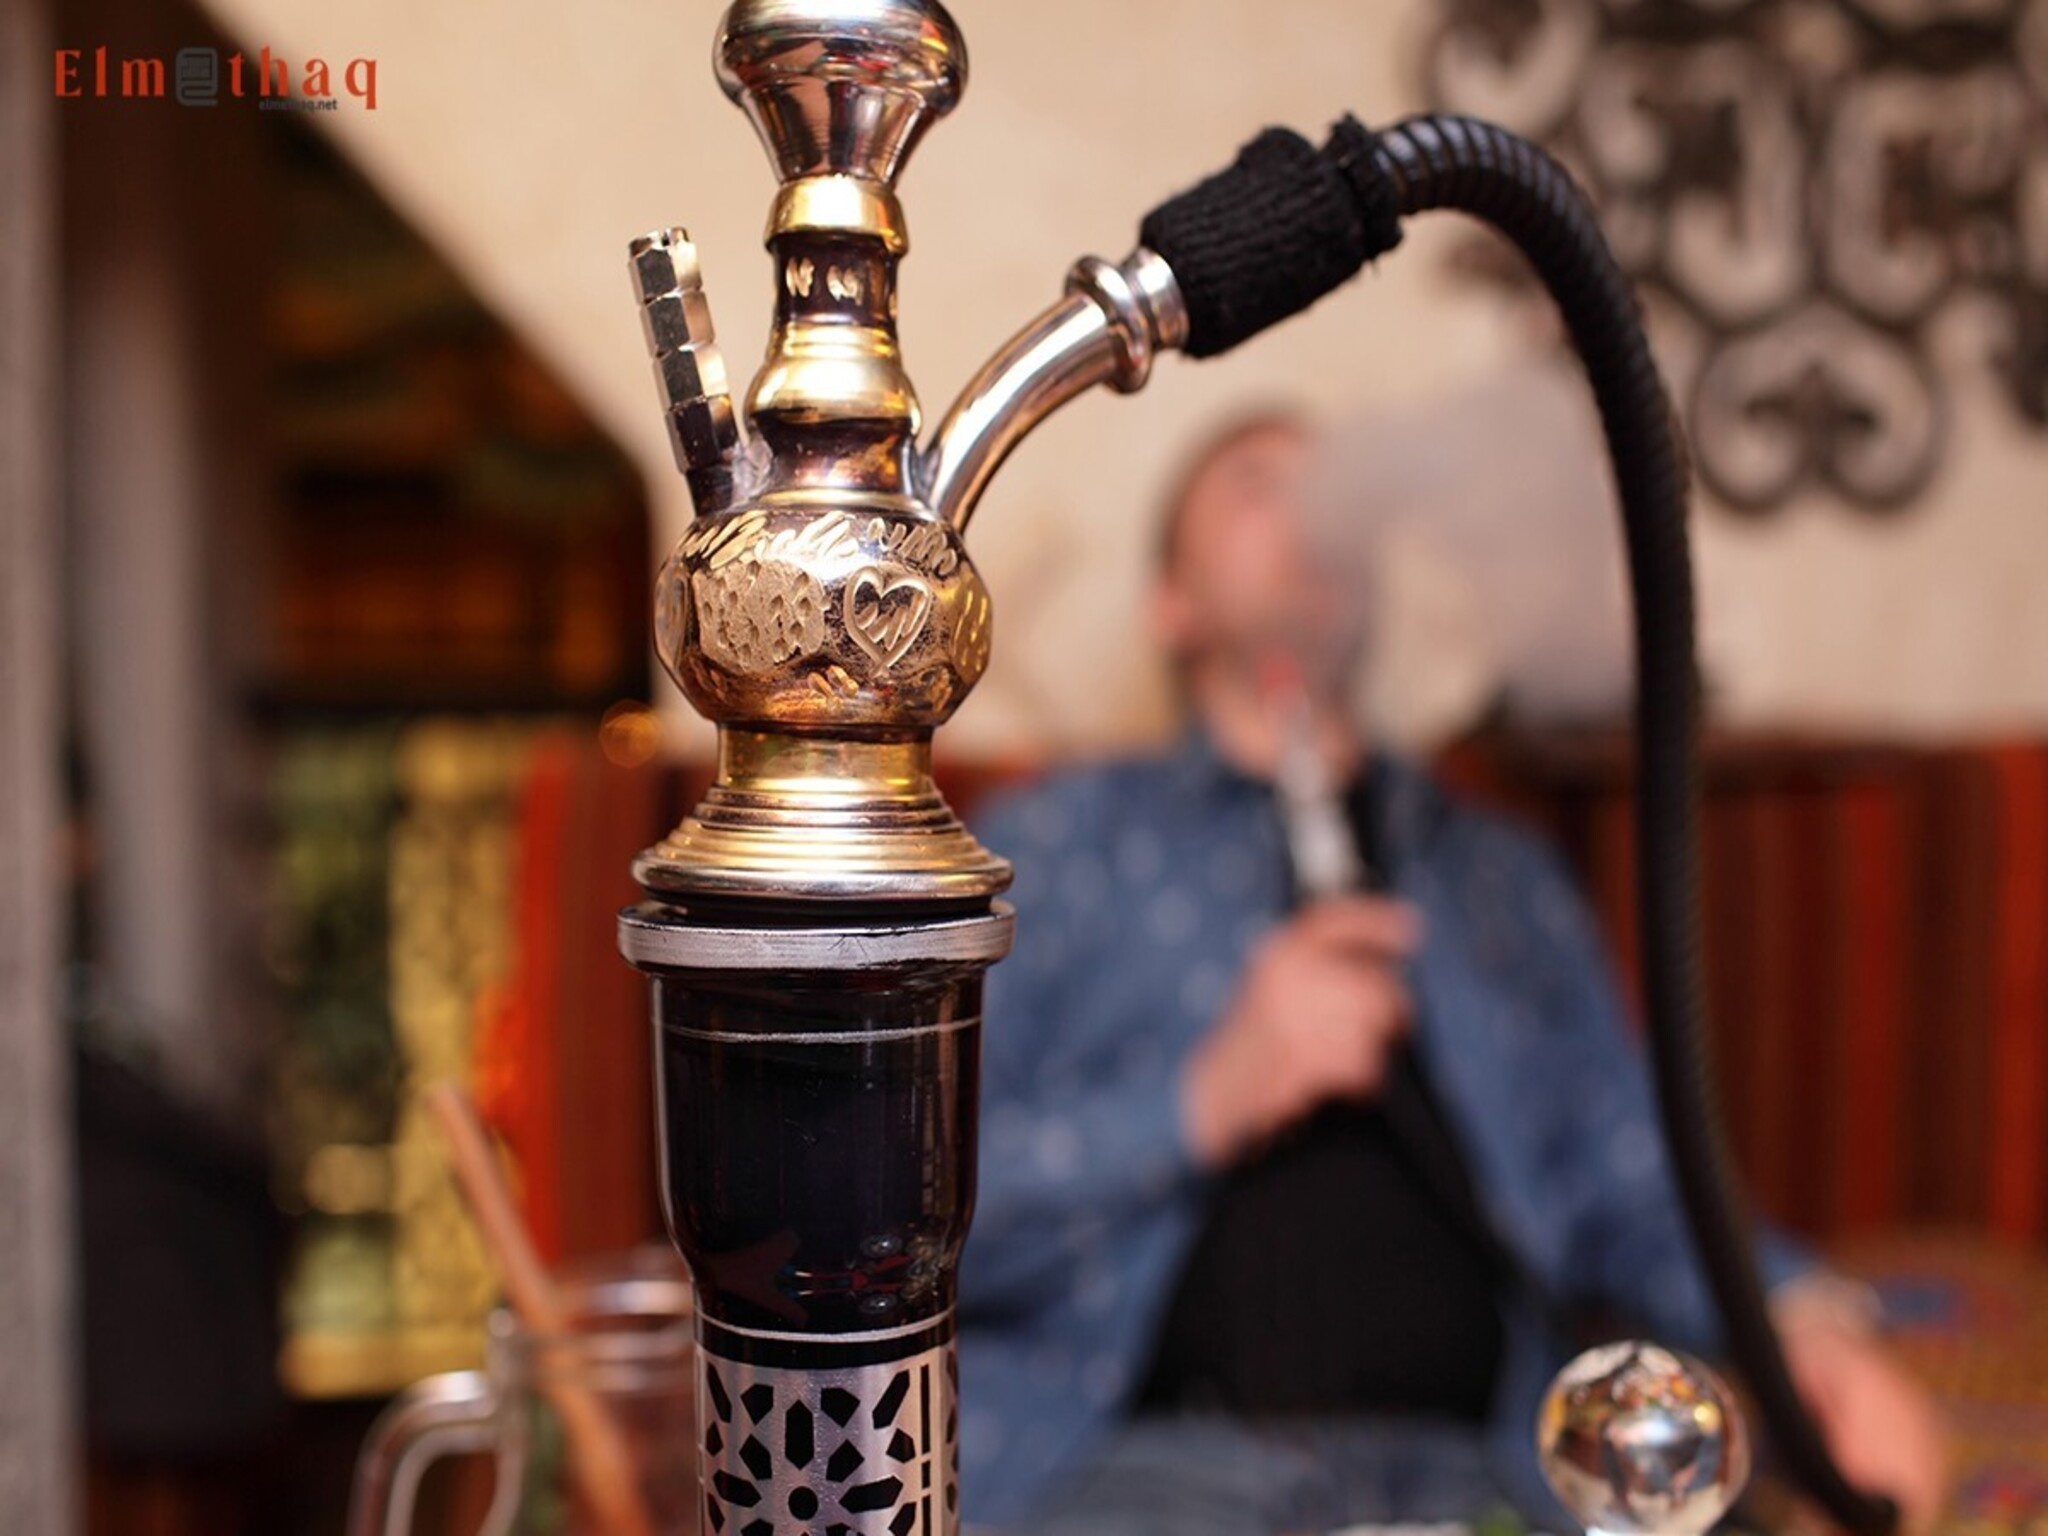 UAE doctors warn against sharing Shisha pipes over respiratory risks